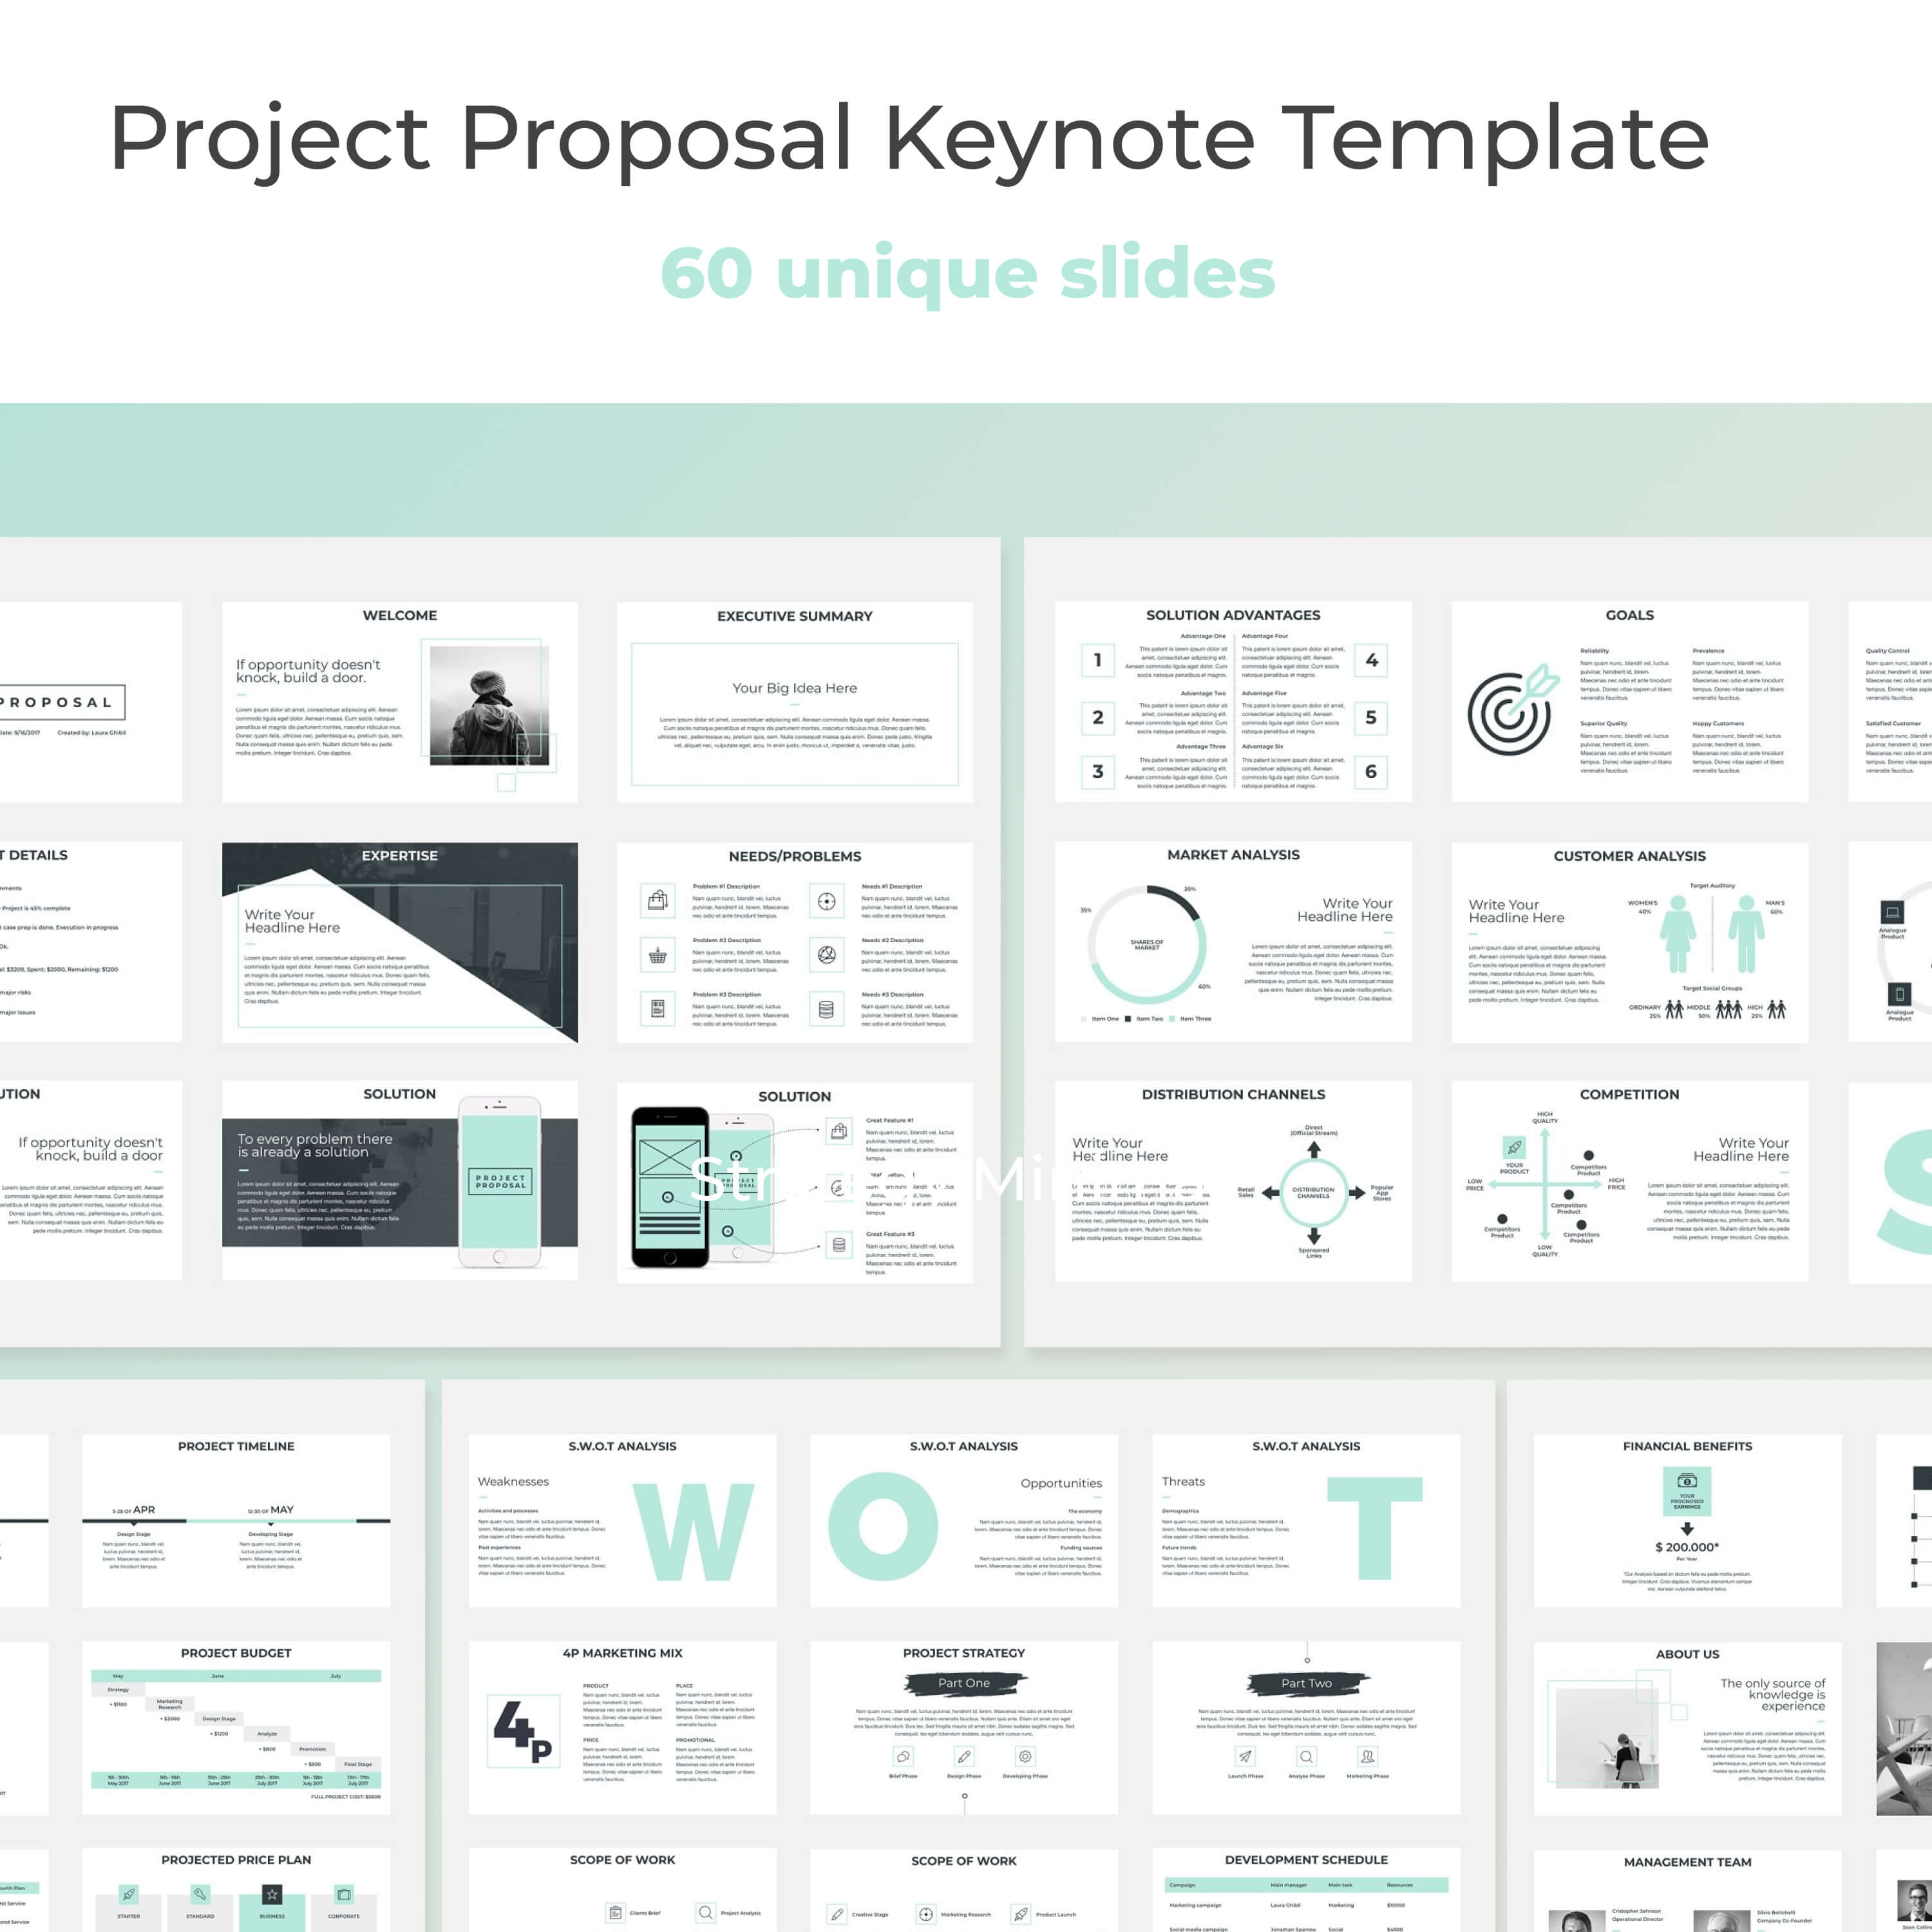 Project proposal keynote.